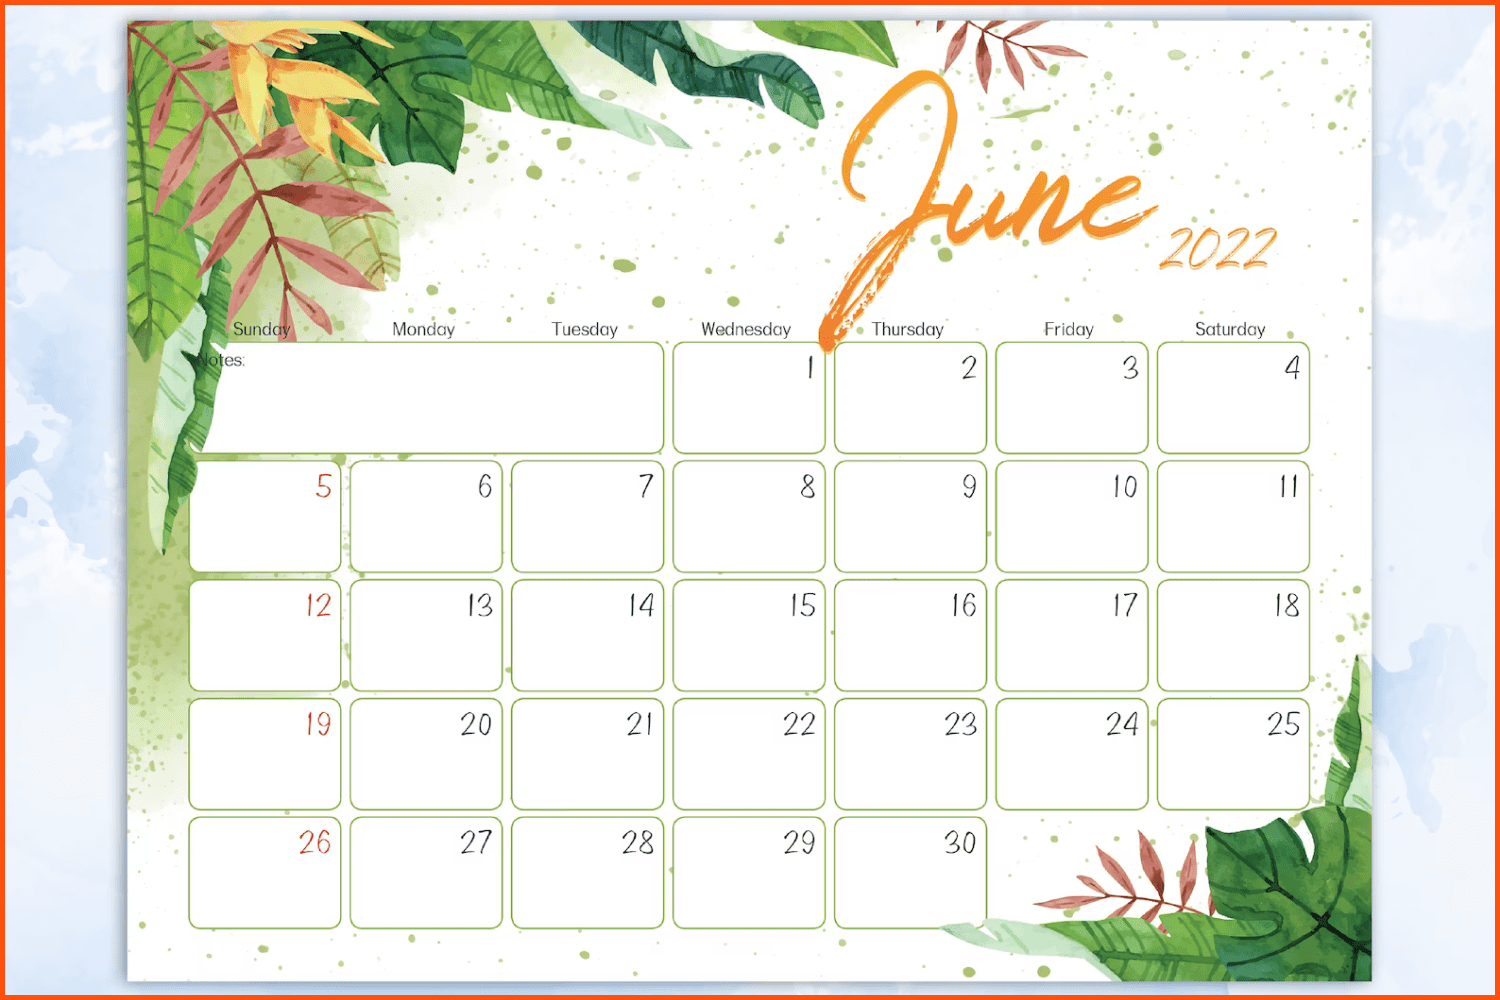 Editable June calendar 2022.